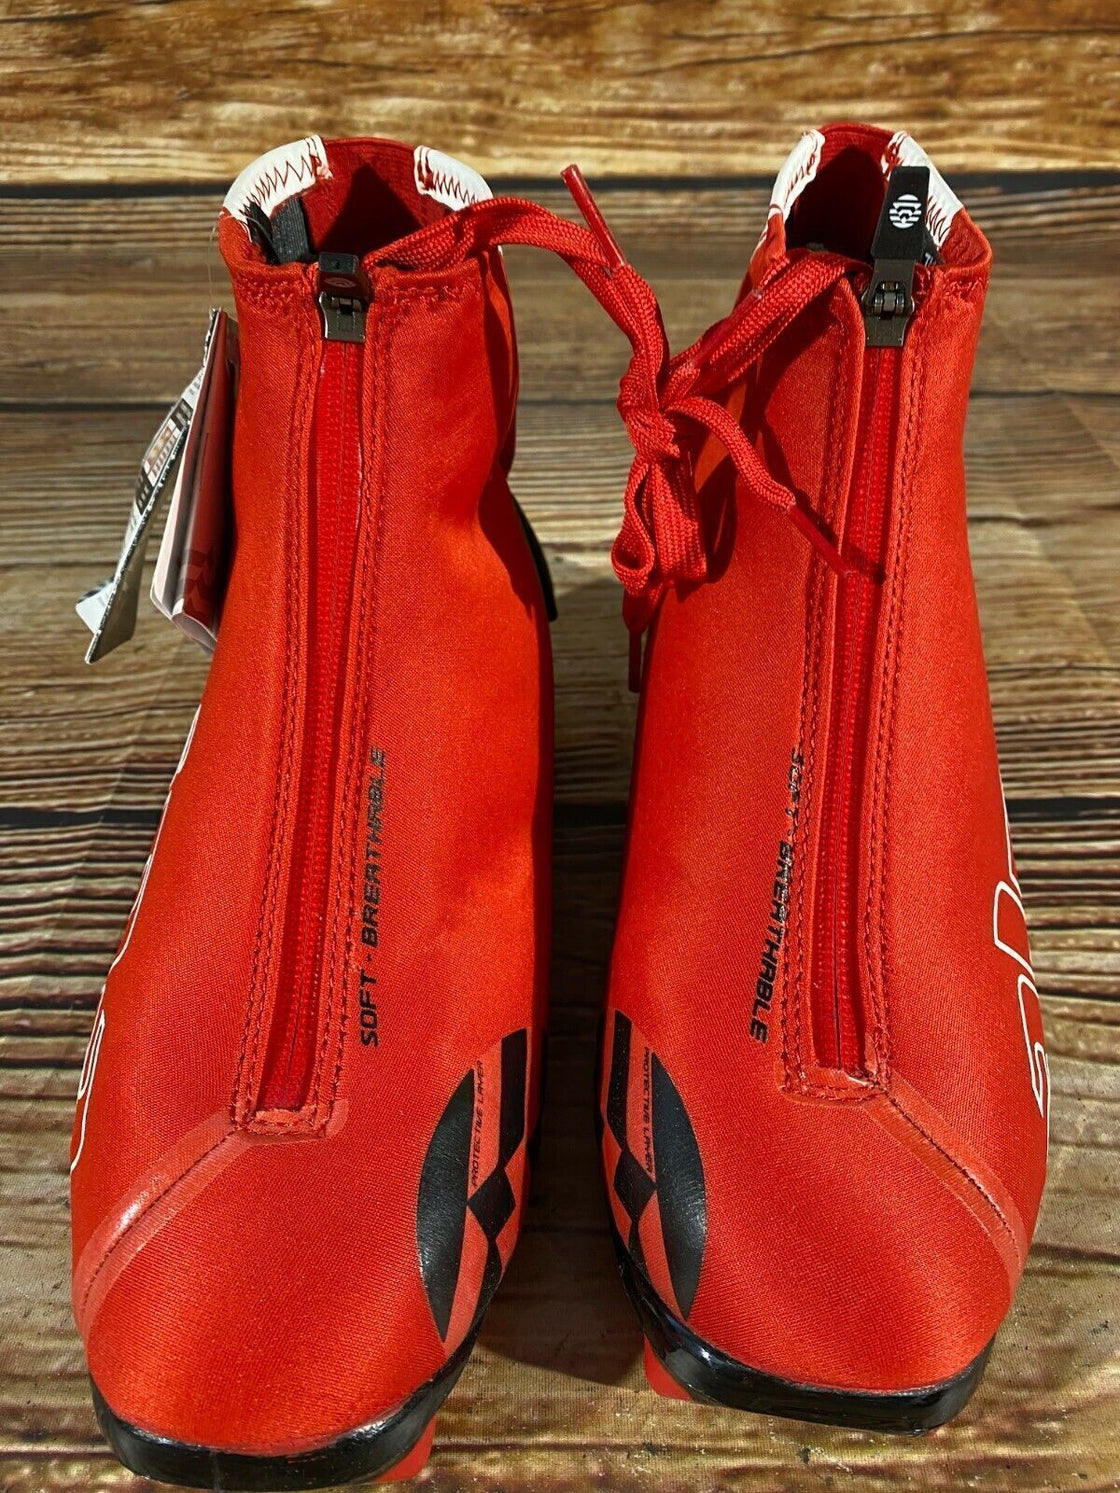 Alpina RCL Nordic Cross Country Ski Boots Size EU39 US7 NNN bindings